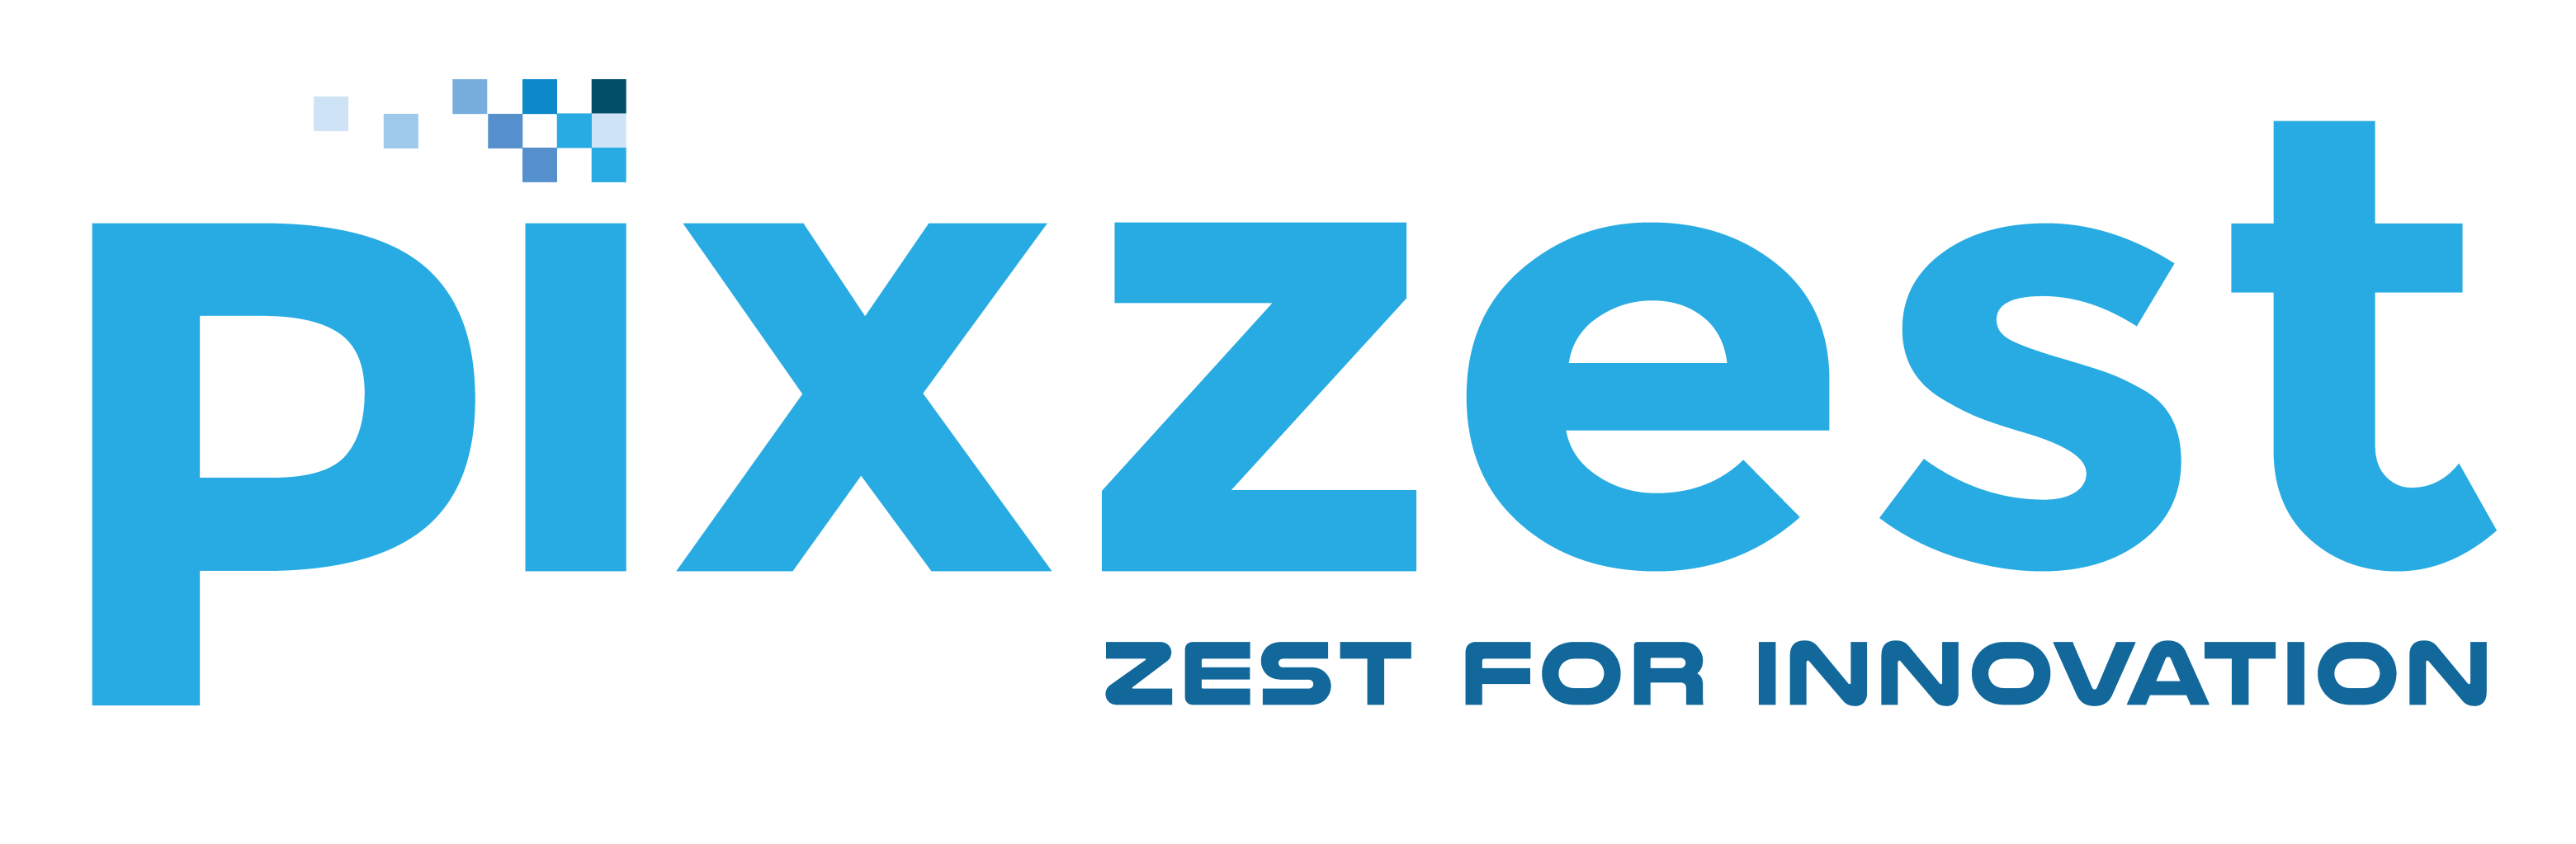 Pixzest Technologies